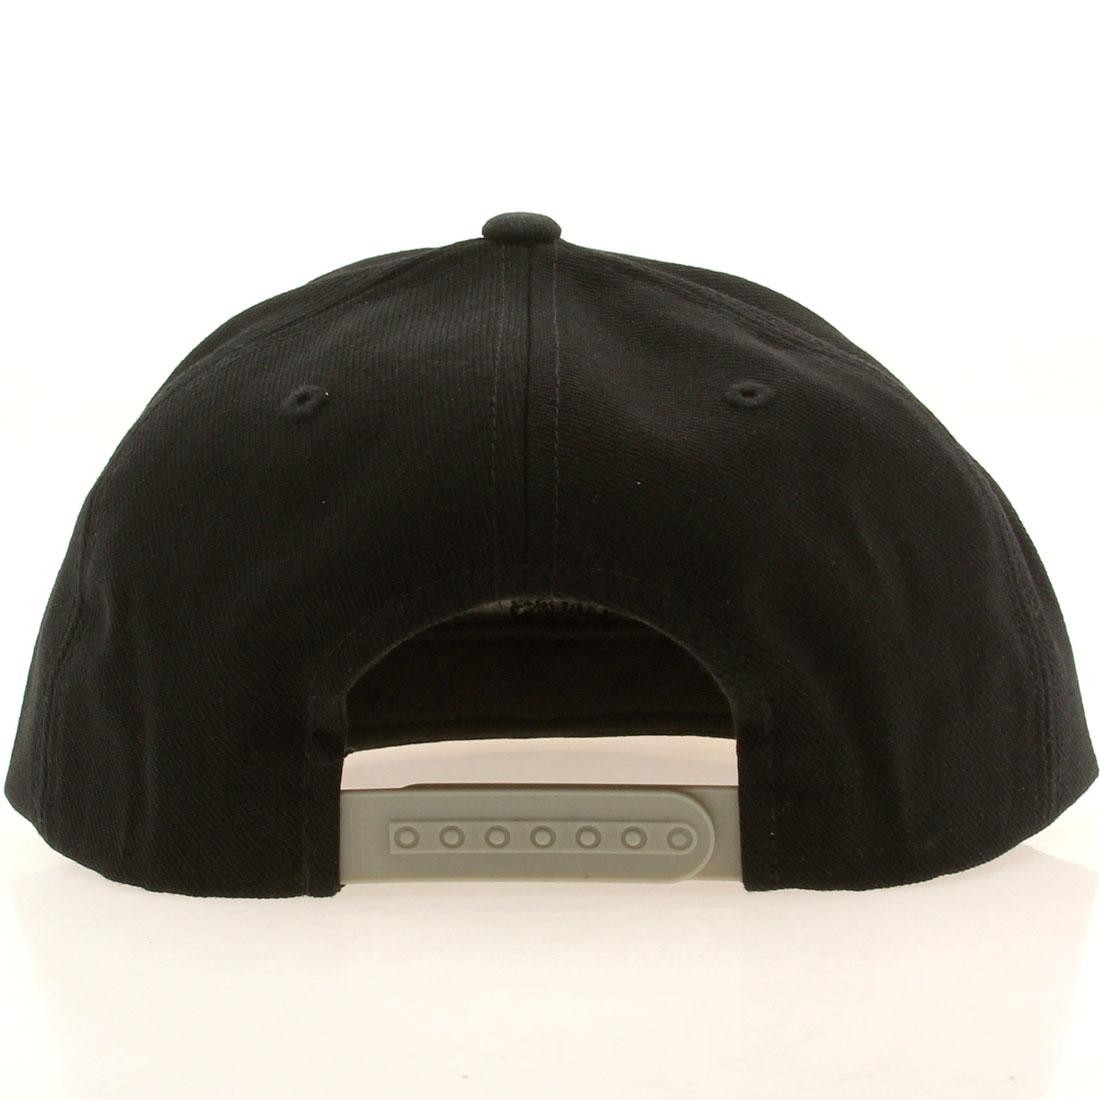 American Needle Los Angeles Kings Black Iconic Slouch Adjustable Hat